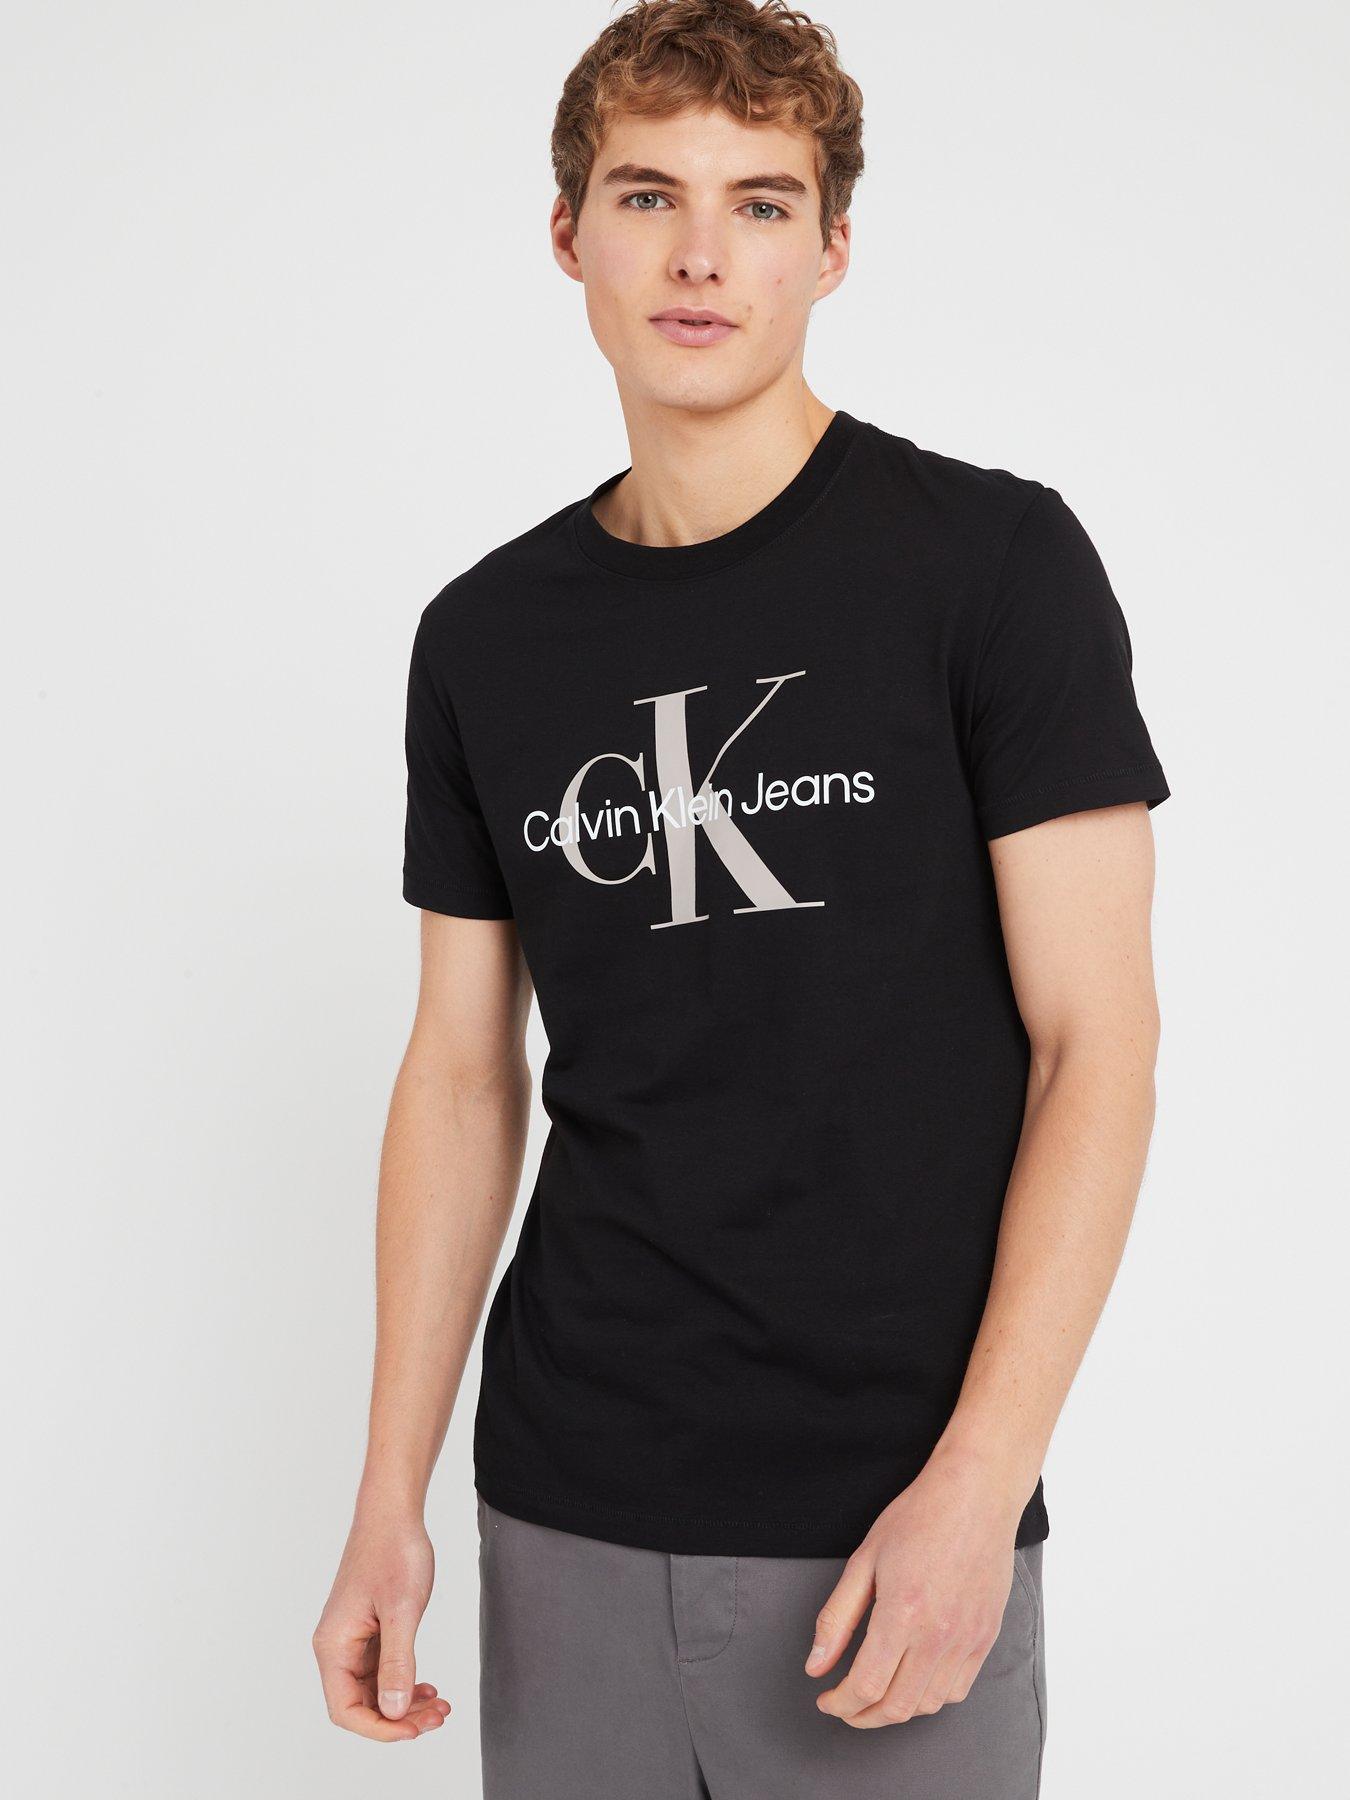 Black | Calvin | T-shirts Men & Very klein polos | | Ireland